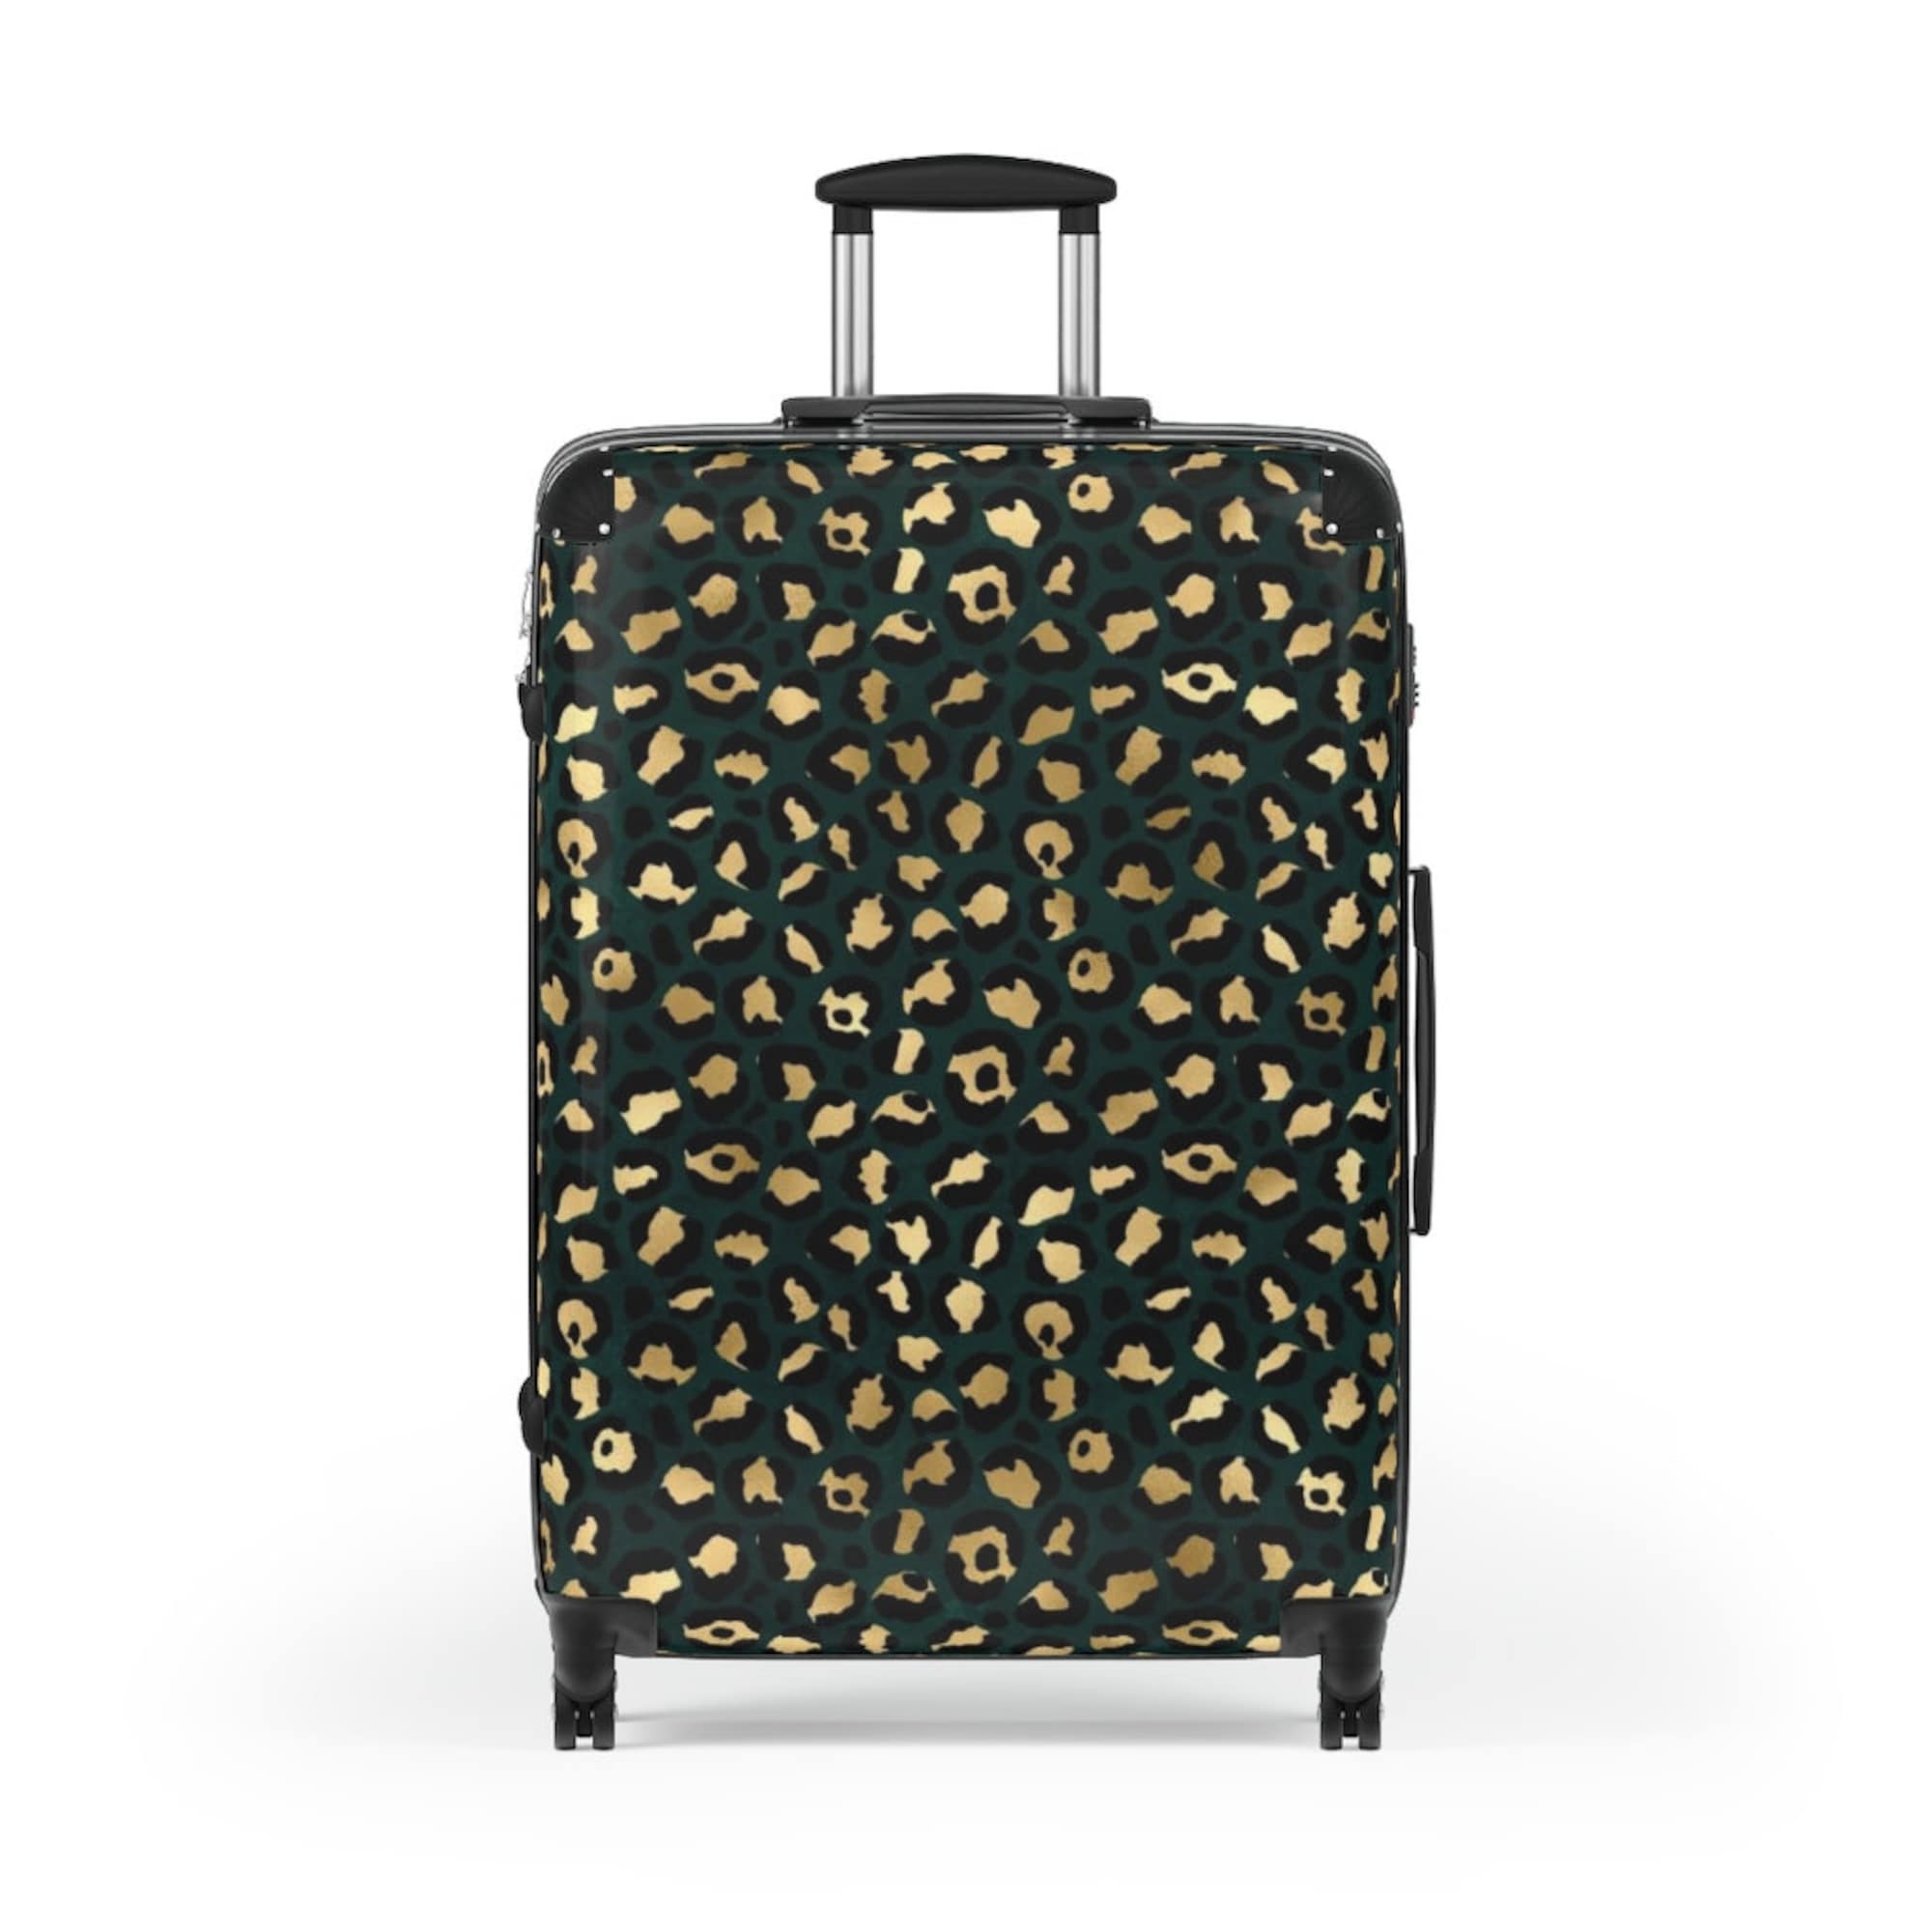 The Deep Tropics Suitcase